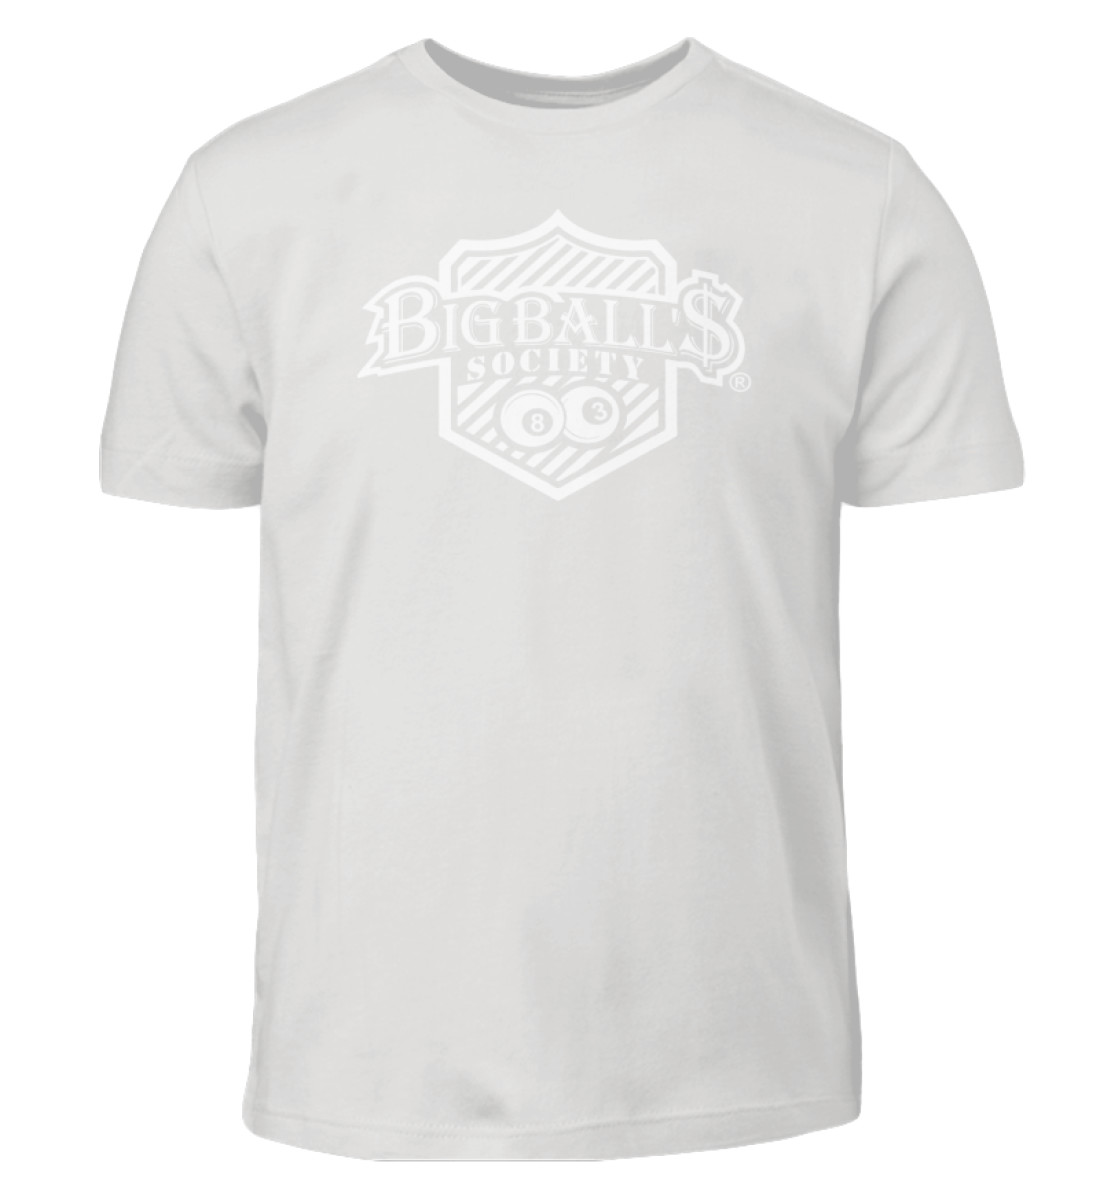 Big Ball'$ Society Logo White $elfmade  - Kinder T-Shirt